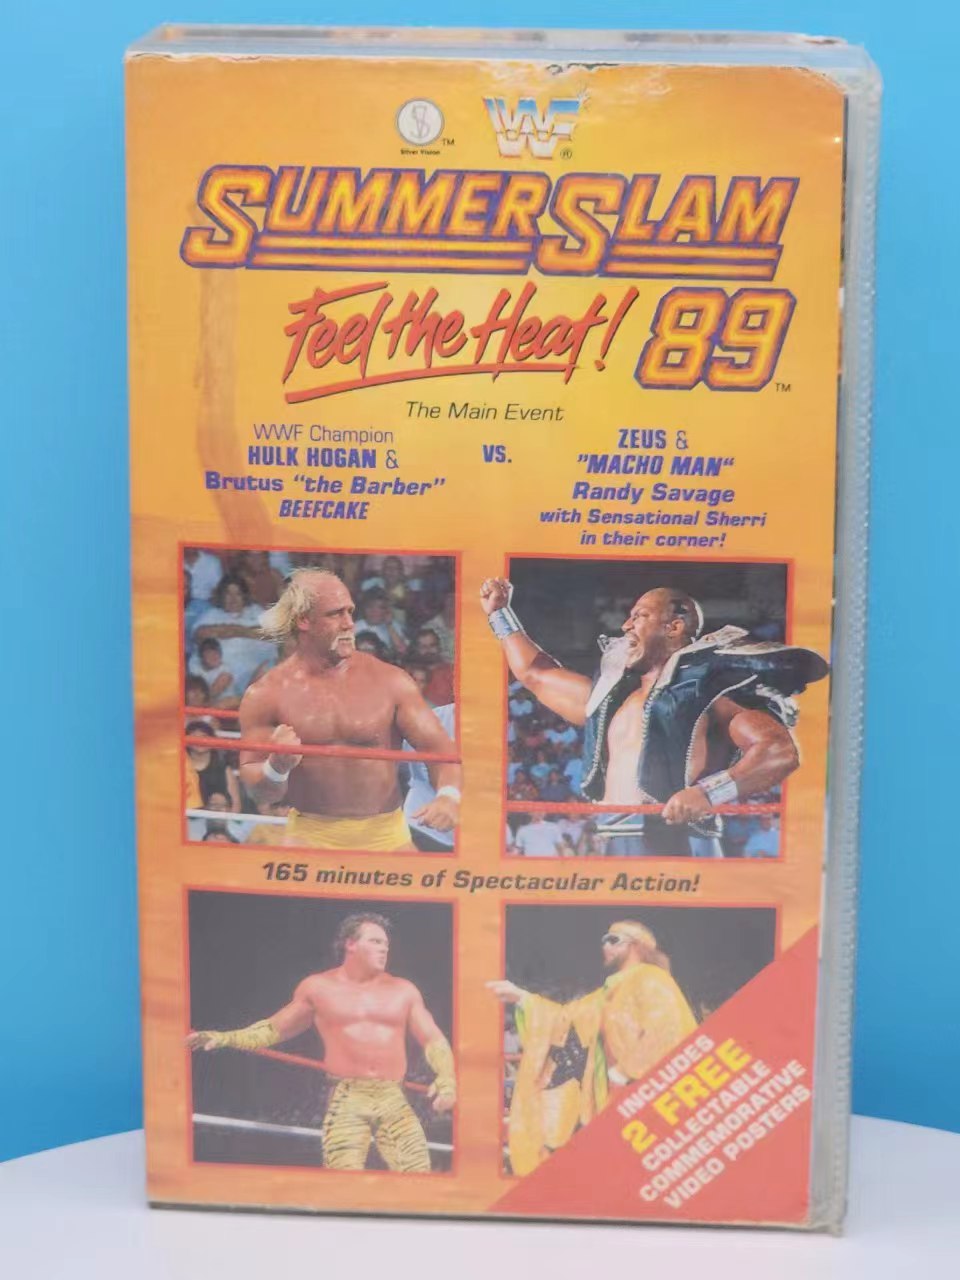 WWF Summerslam 1989 VHS